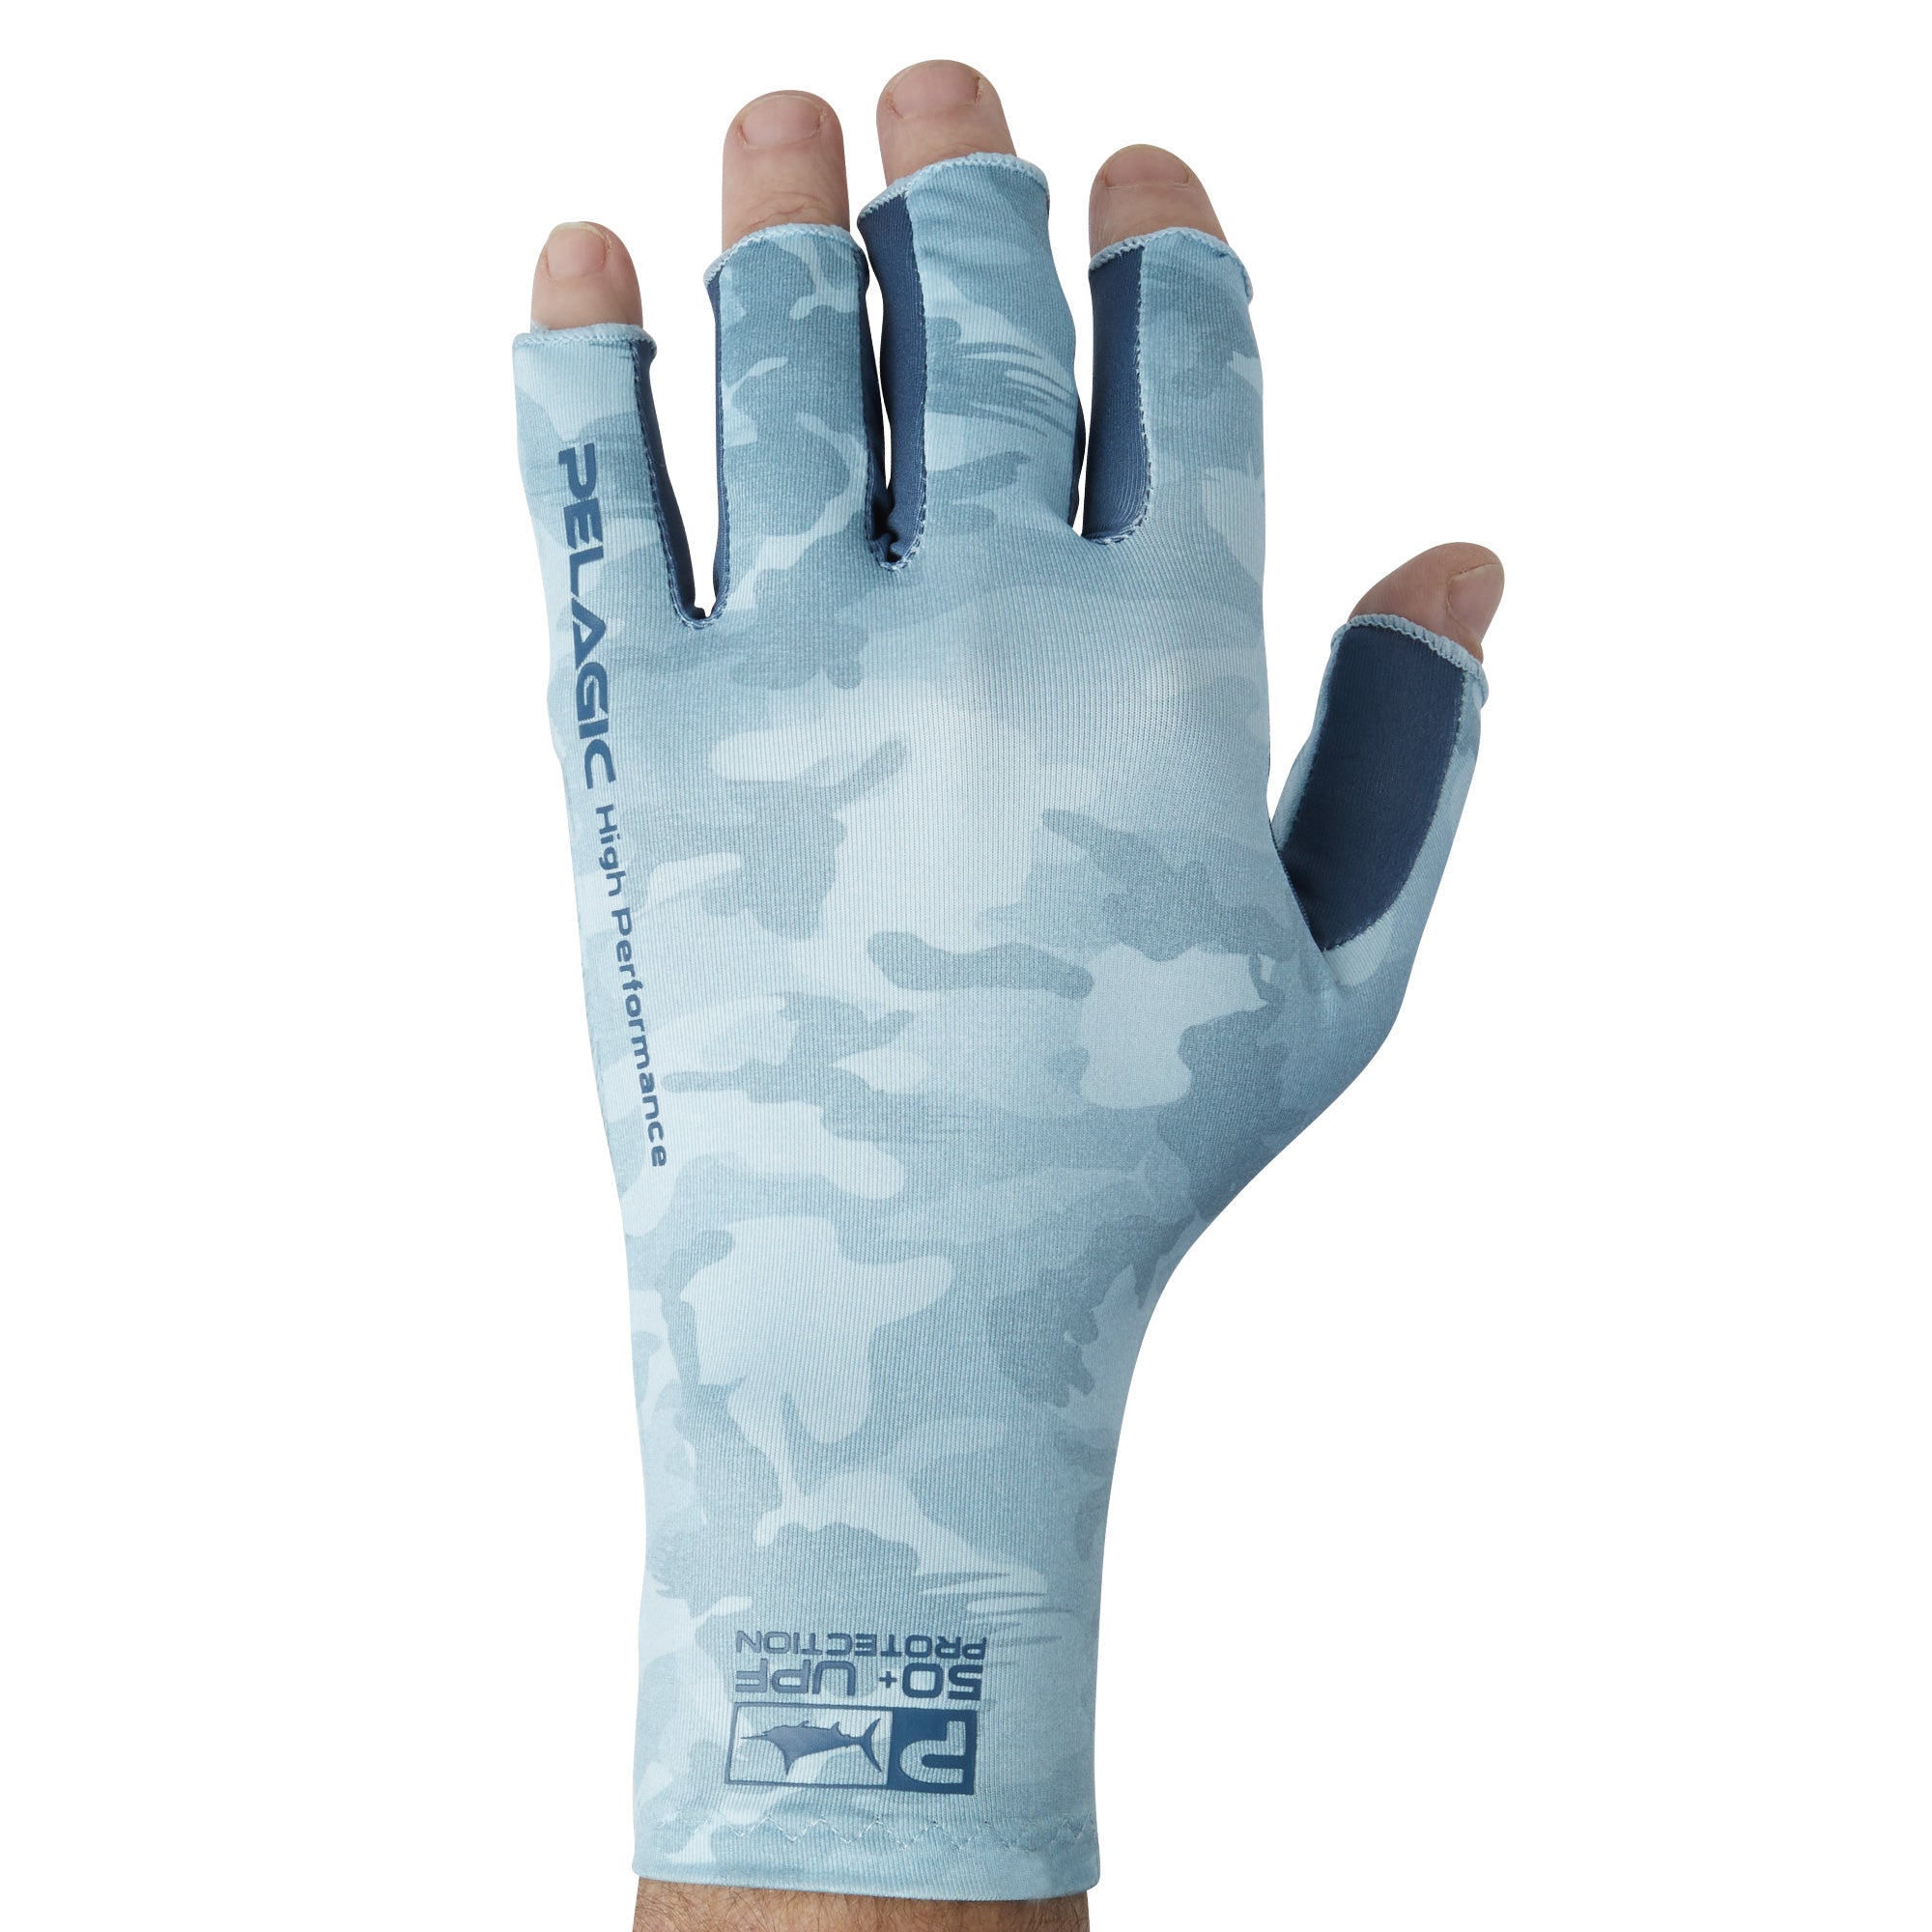 Mens Neoprene Fishing Gloves (Lightweight Waterproof) (S/M) (Green